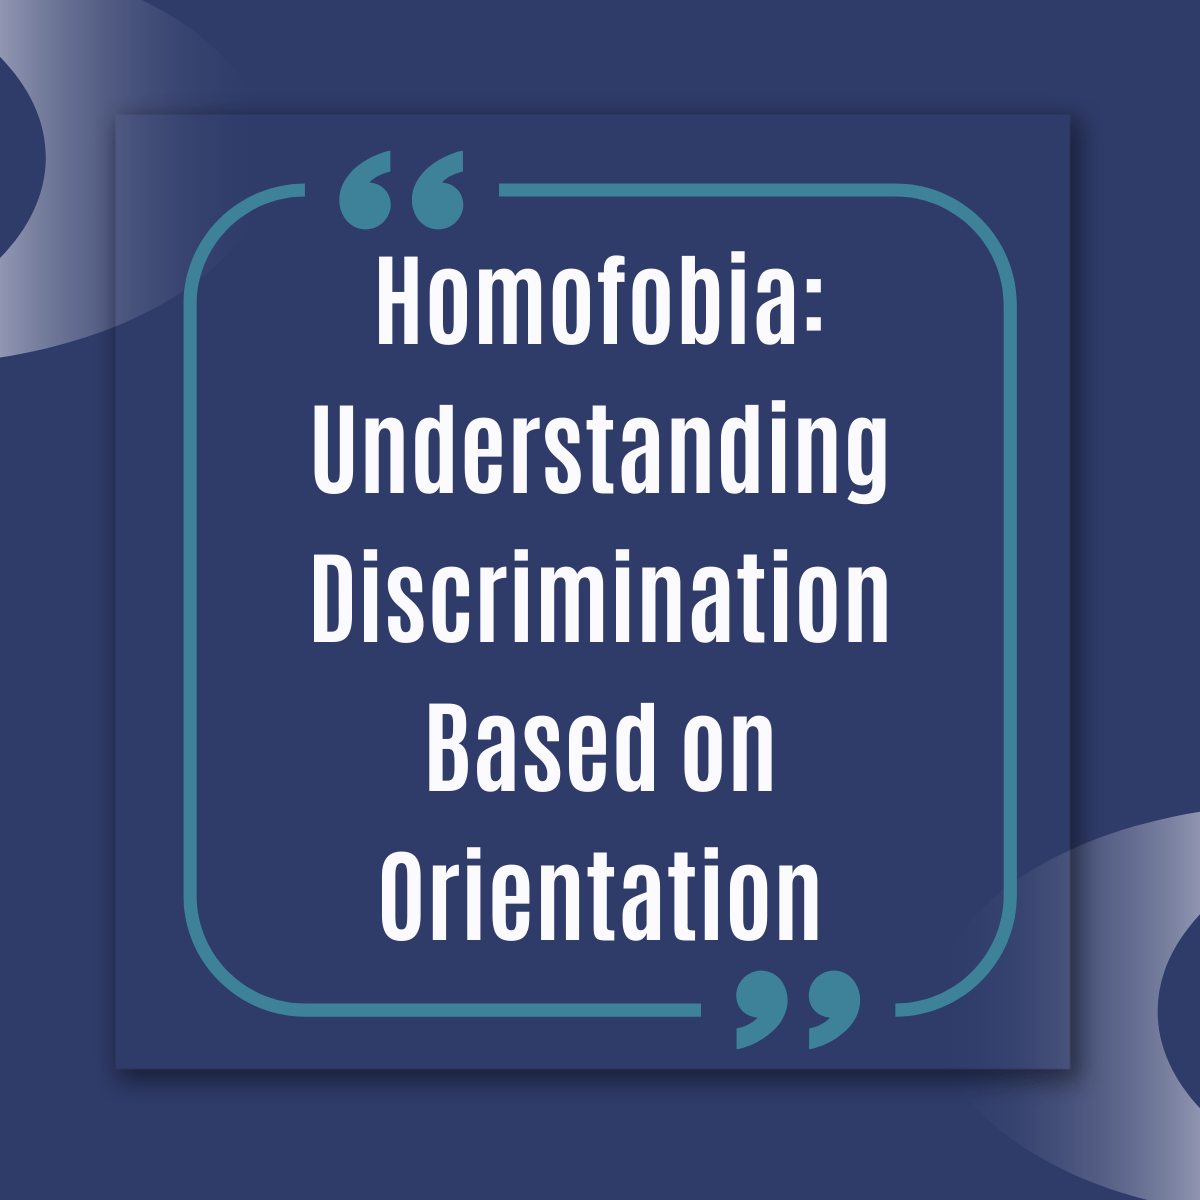 Defining Sexual Orientation Discrimination